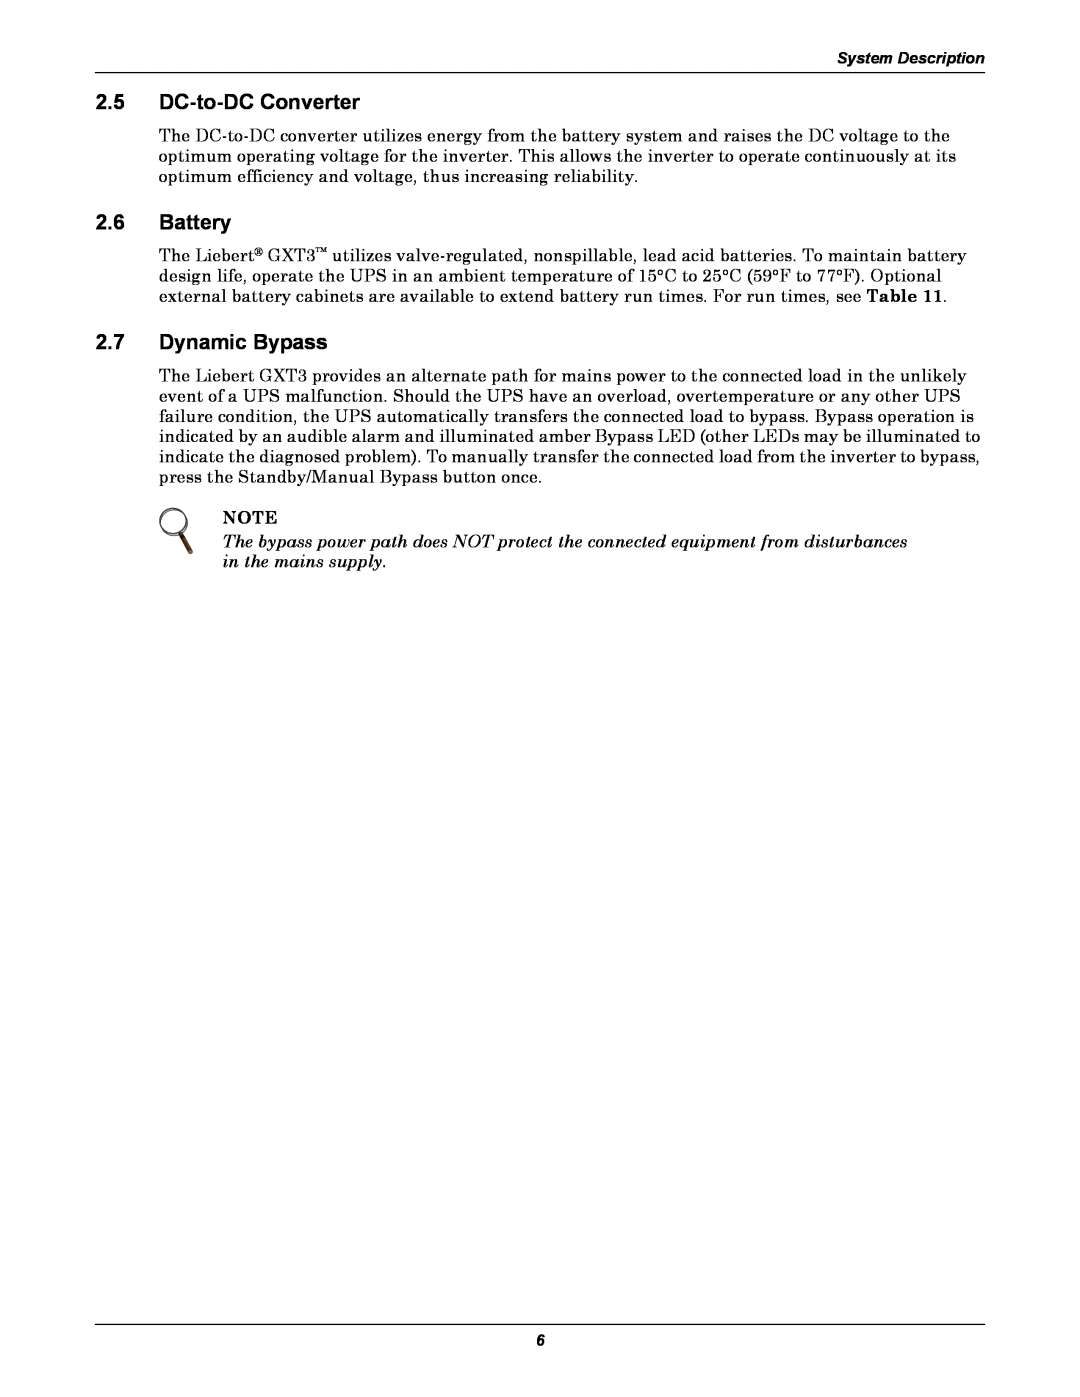 Emerson GXT3 230V user manual 2.5DC-to-DCConverter, 2.6Battery, 2.7Dynamic Bypass, System Description 